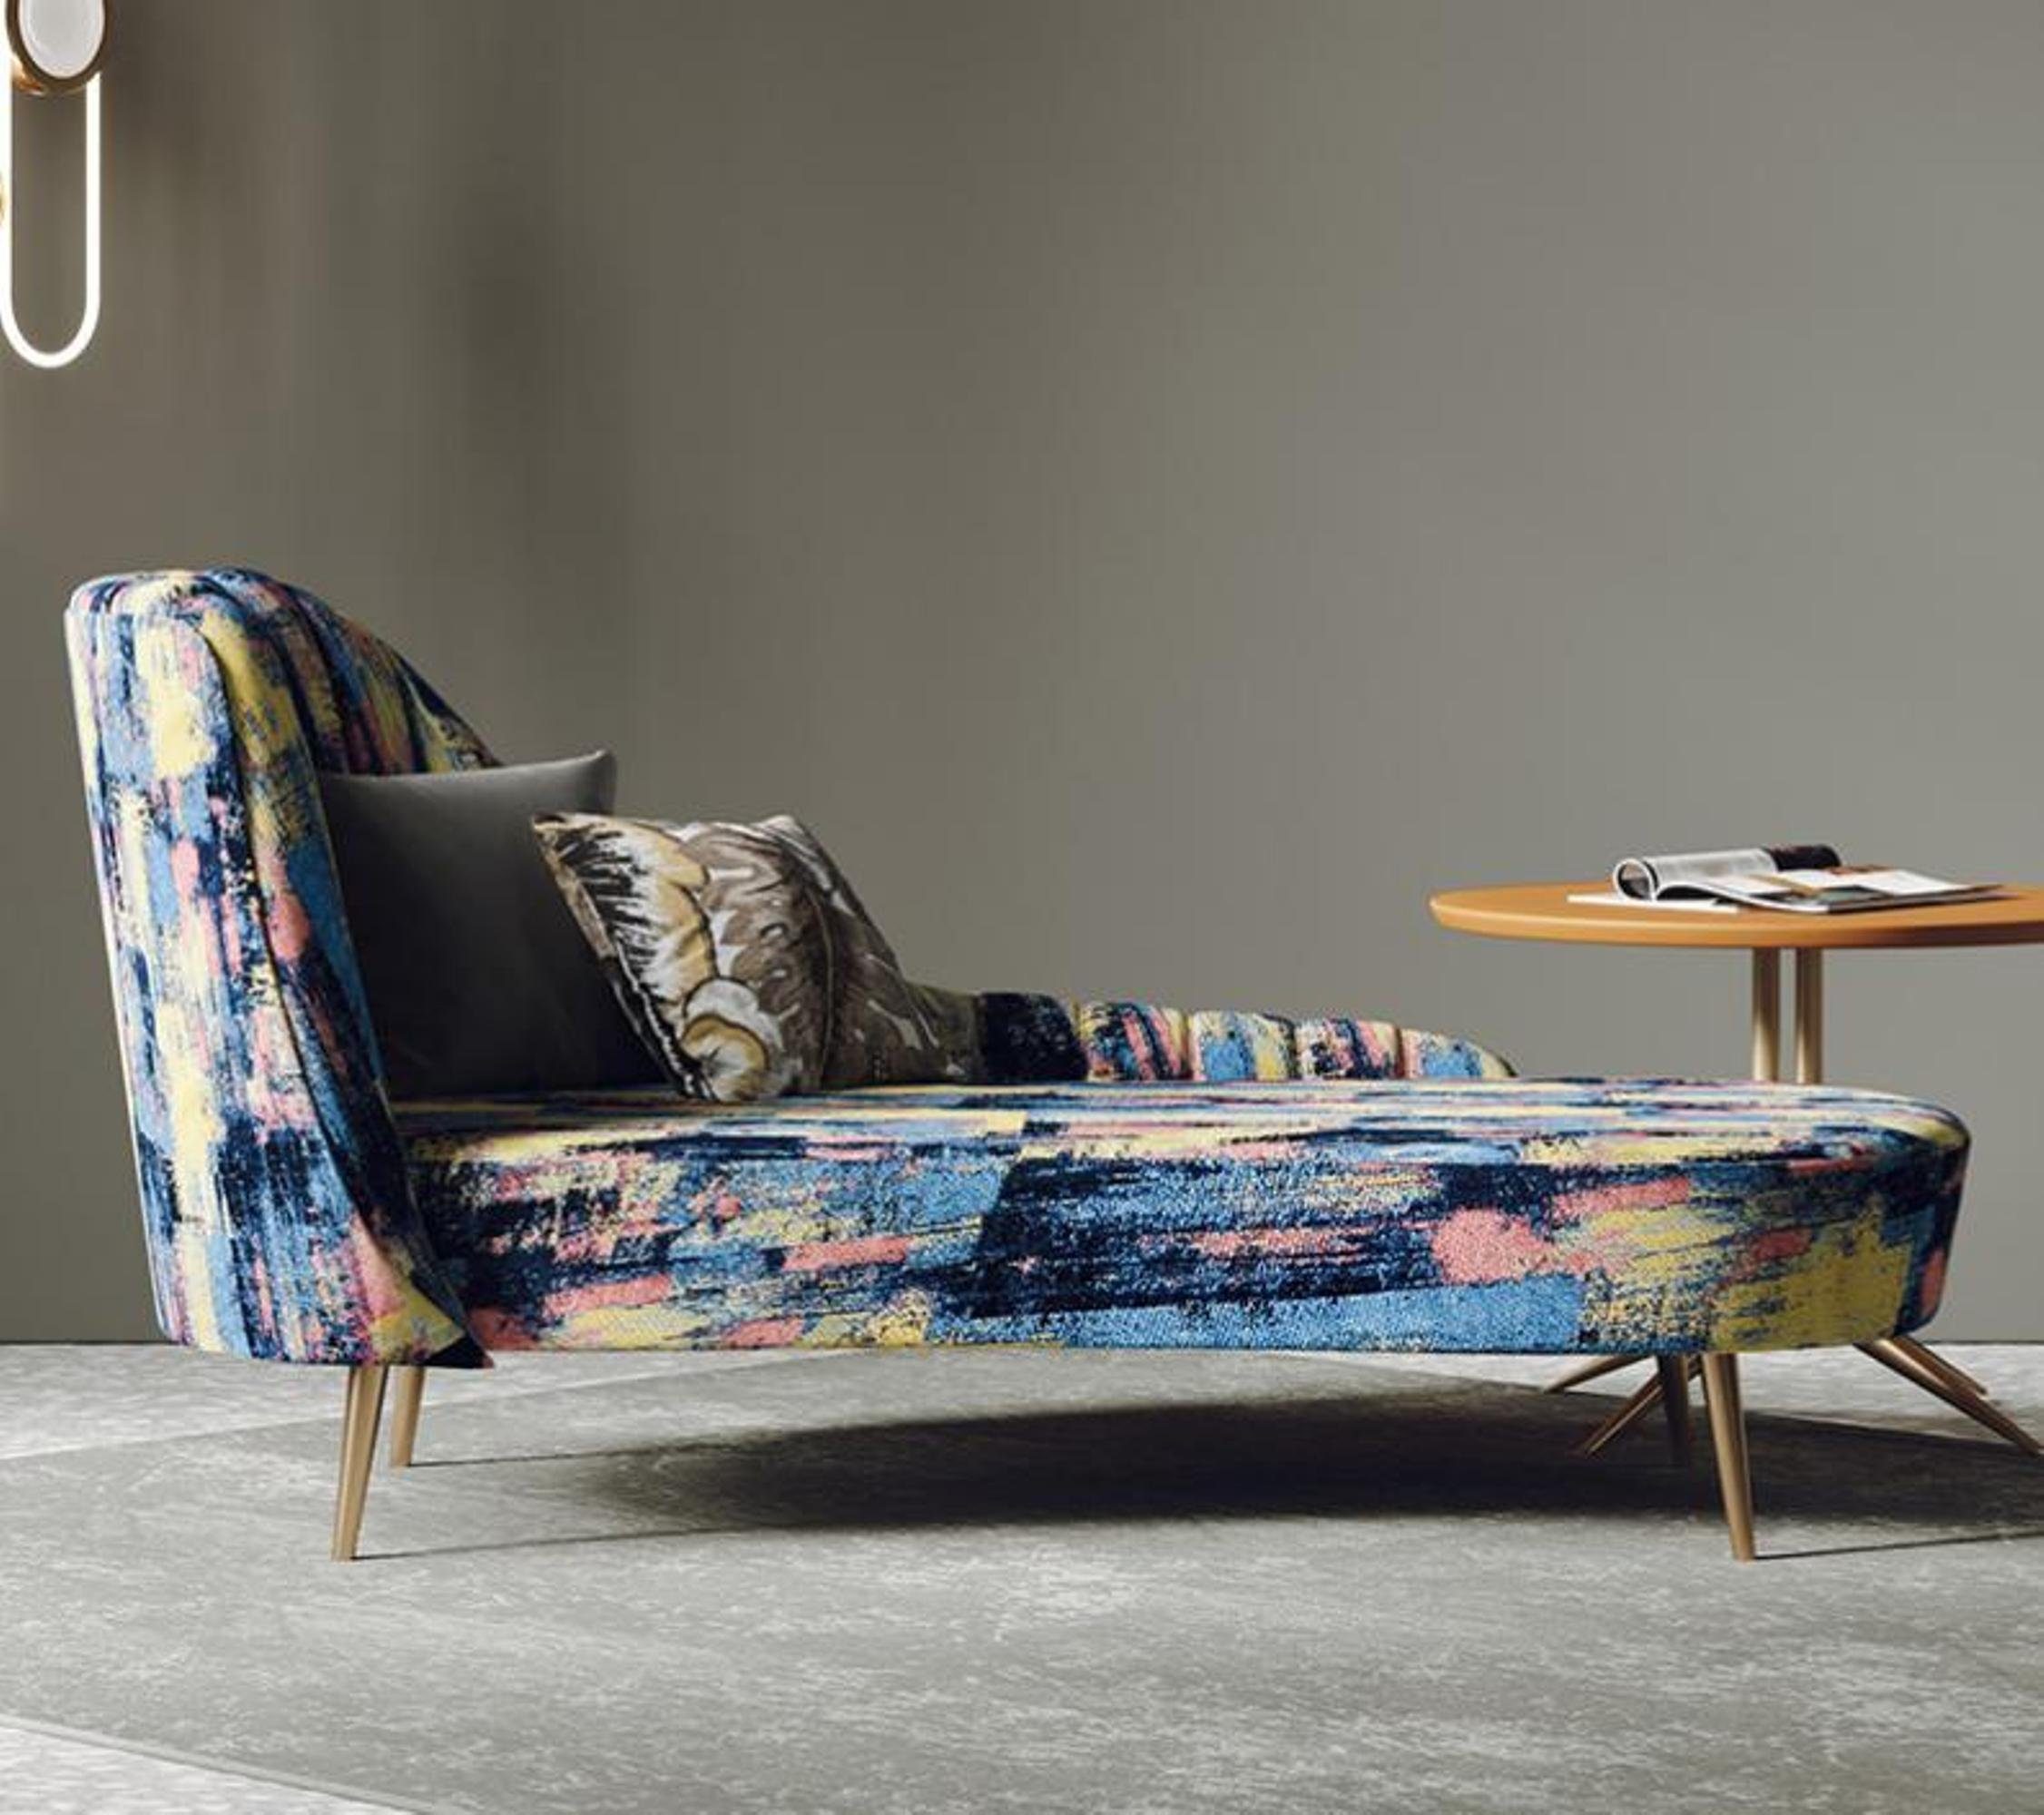 JVmoebel Chaiselongue Bunter Chaiselounge Polster Textil Modern Relax Sitz Luxus Möbel, Made in Europe | Chaiselongues